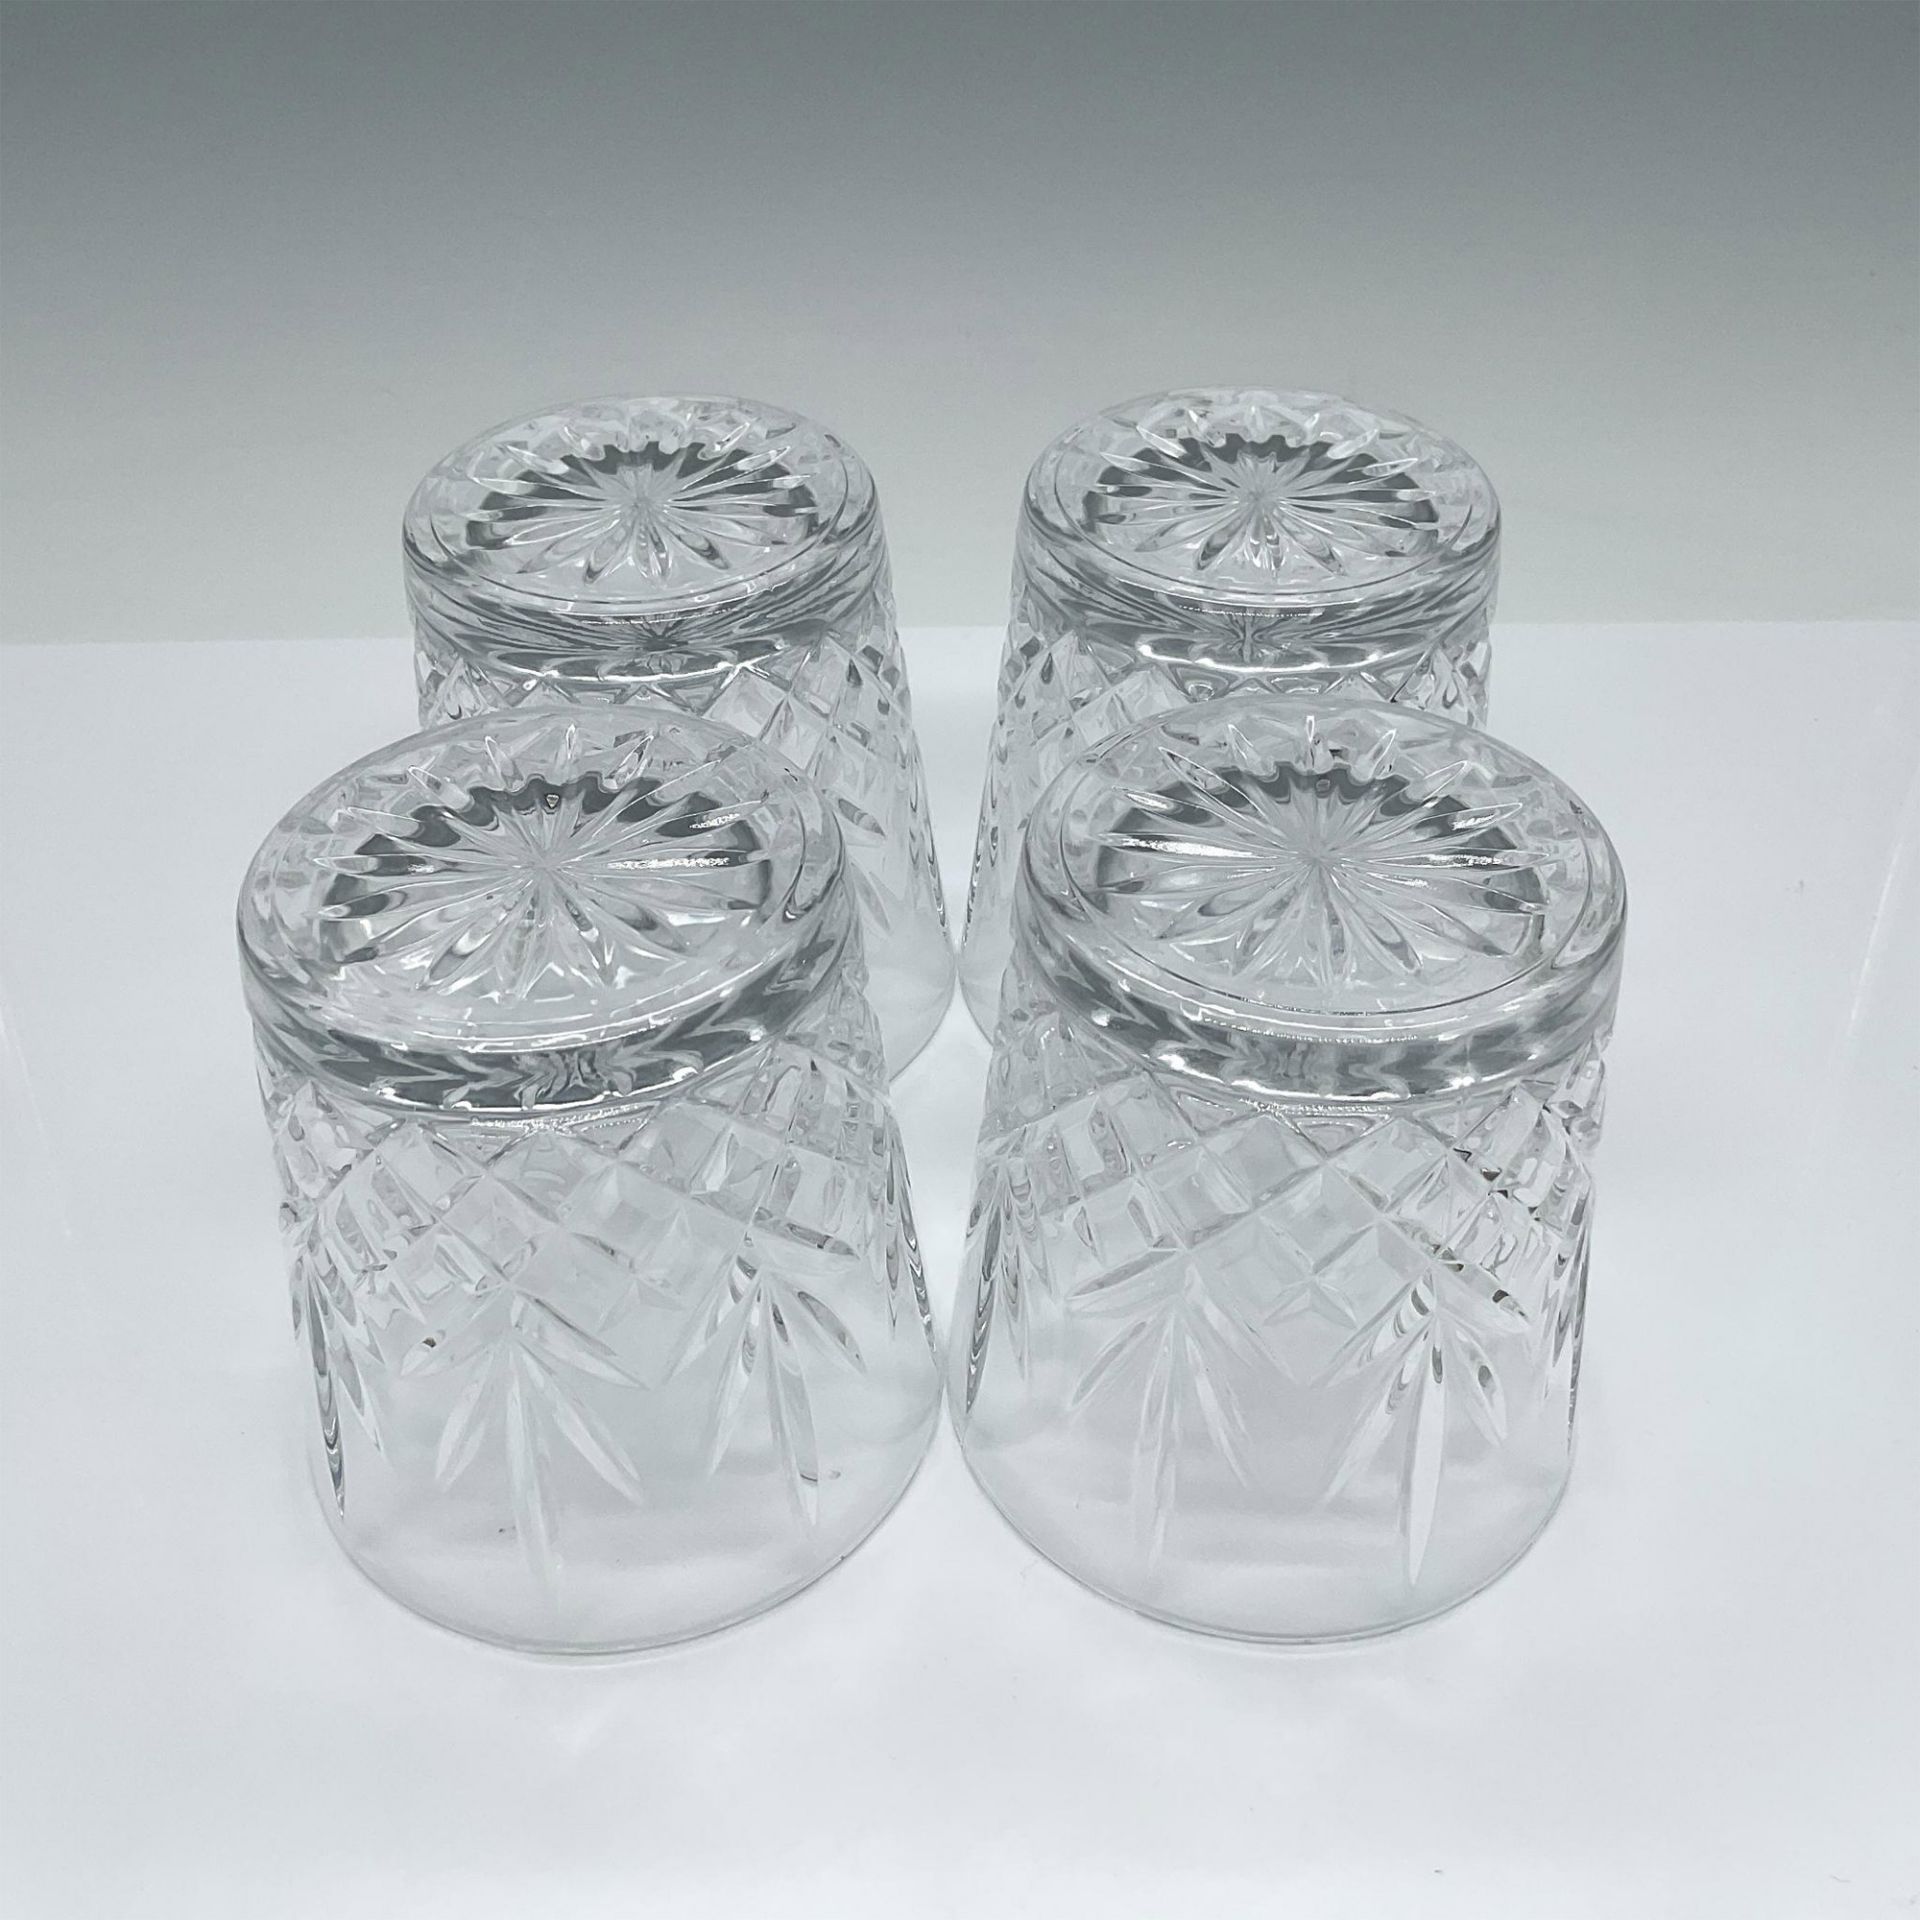 4pc Crystal Rocks Glasses - Image 3 of 3